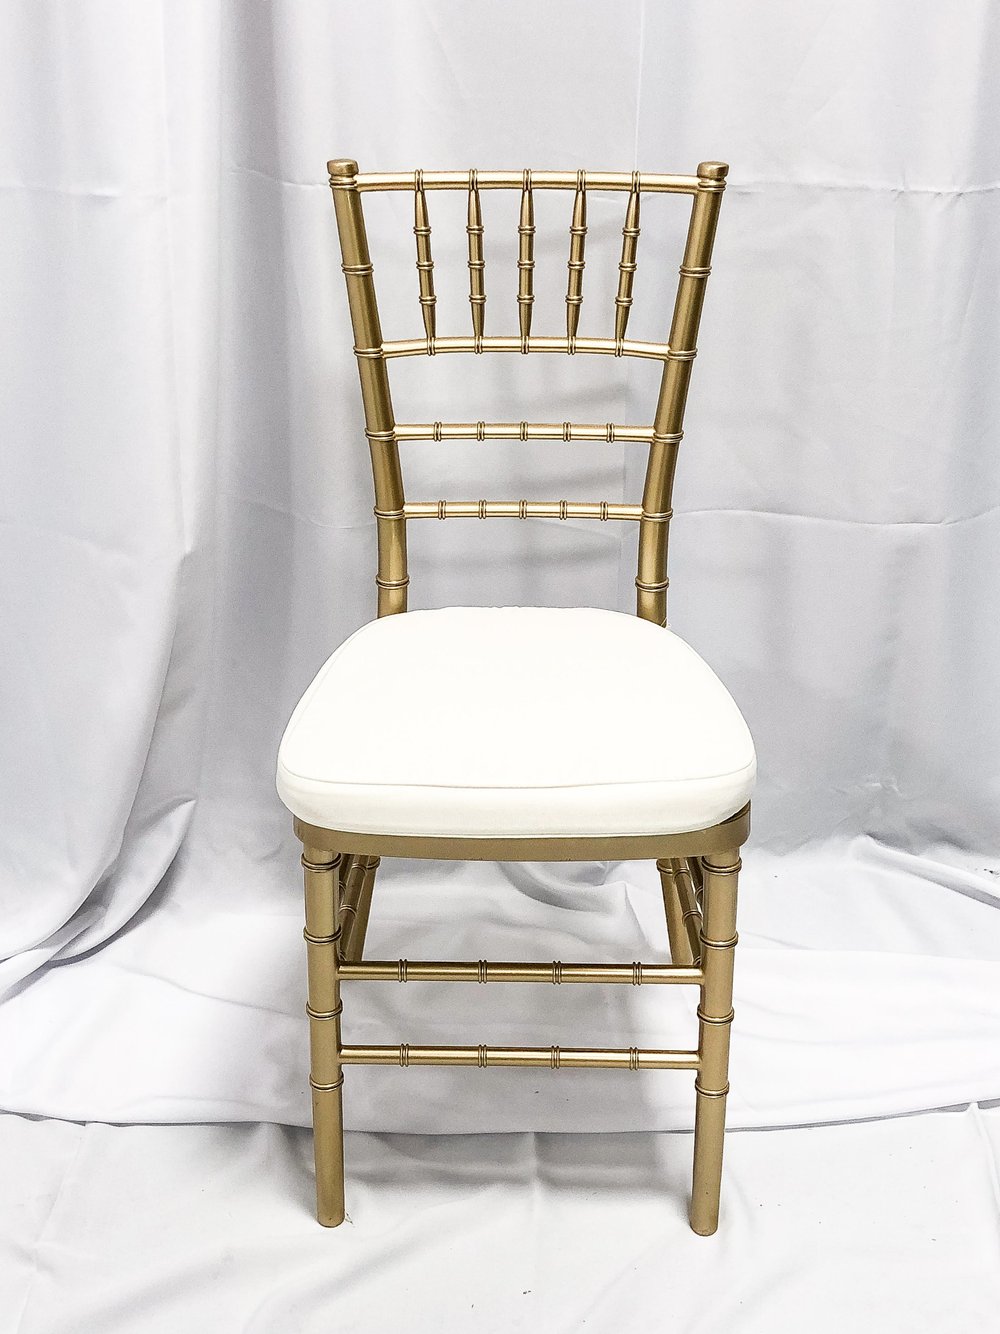 https://images.squarespace-cdn.com/content/v1/5e7051de192648493054ac07/1640720406913-12PZ1SM7C8G7JZZVU0RI/Gold+Chiavari+Chair+with+Cushion.jpg?format=1000w